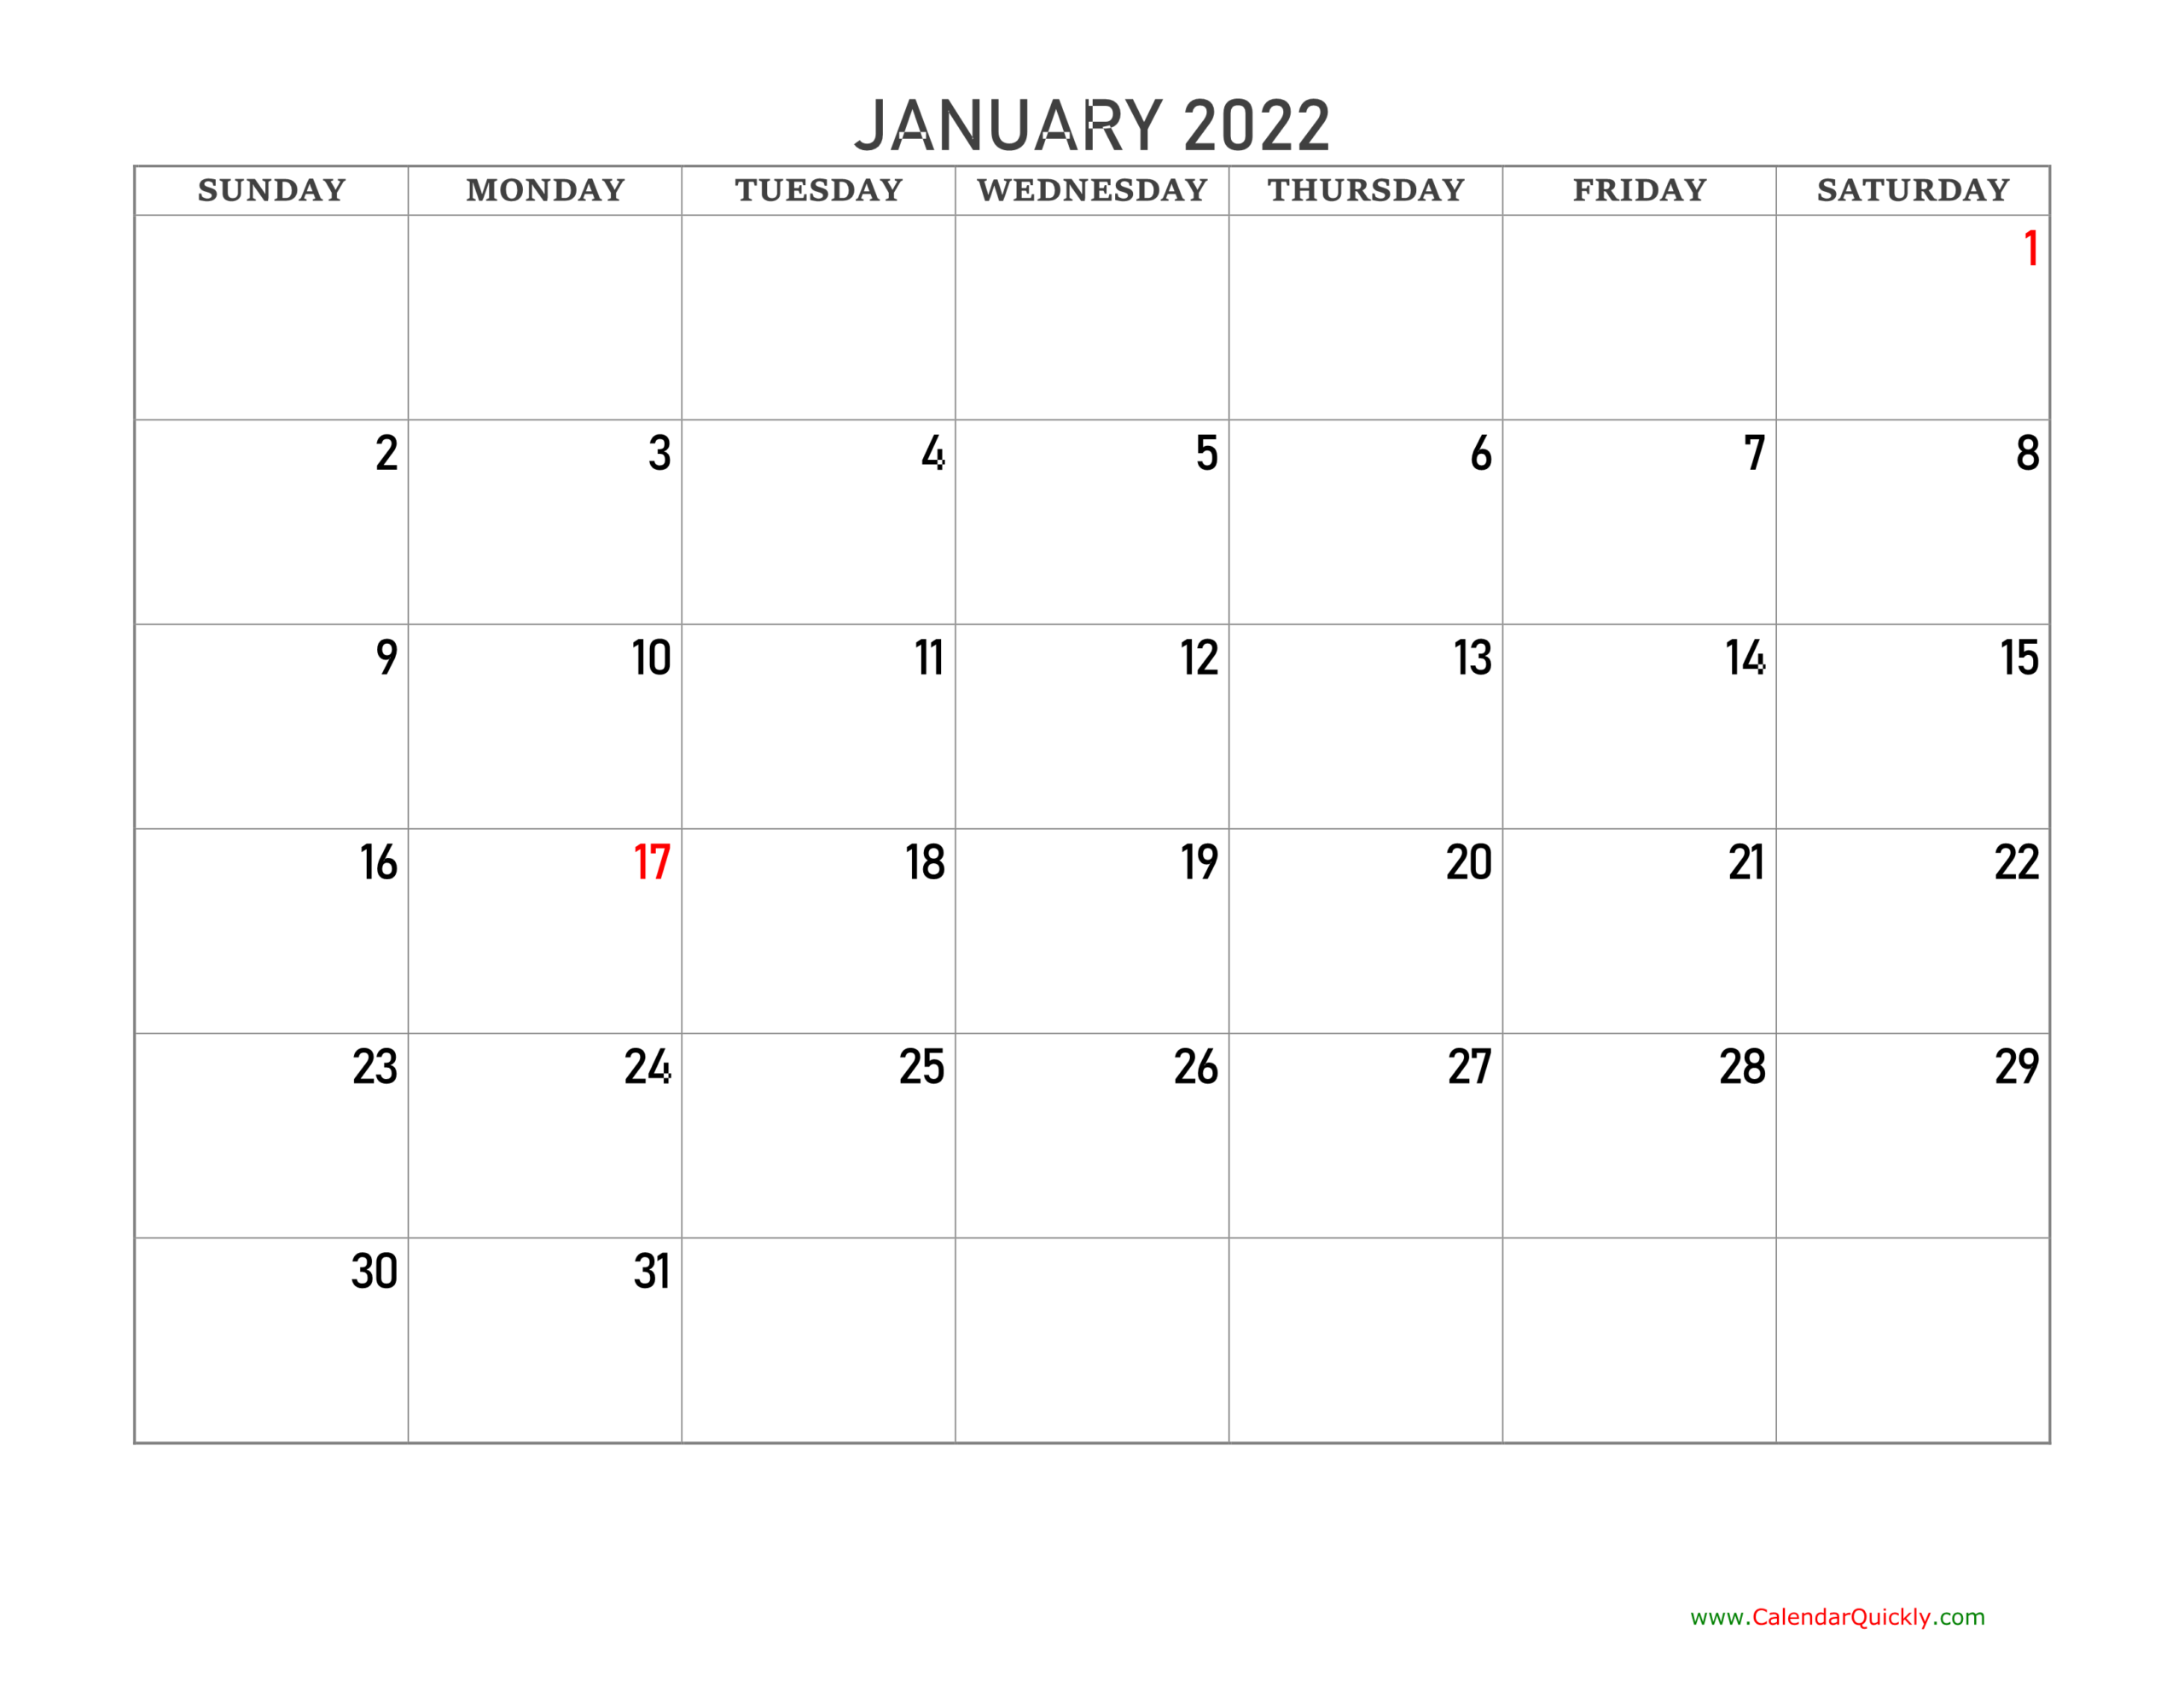 Get Year 2022 February Calendar